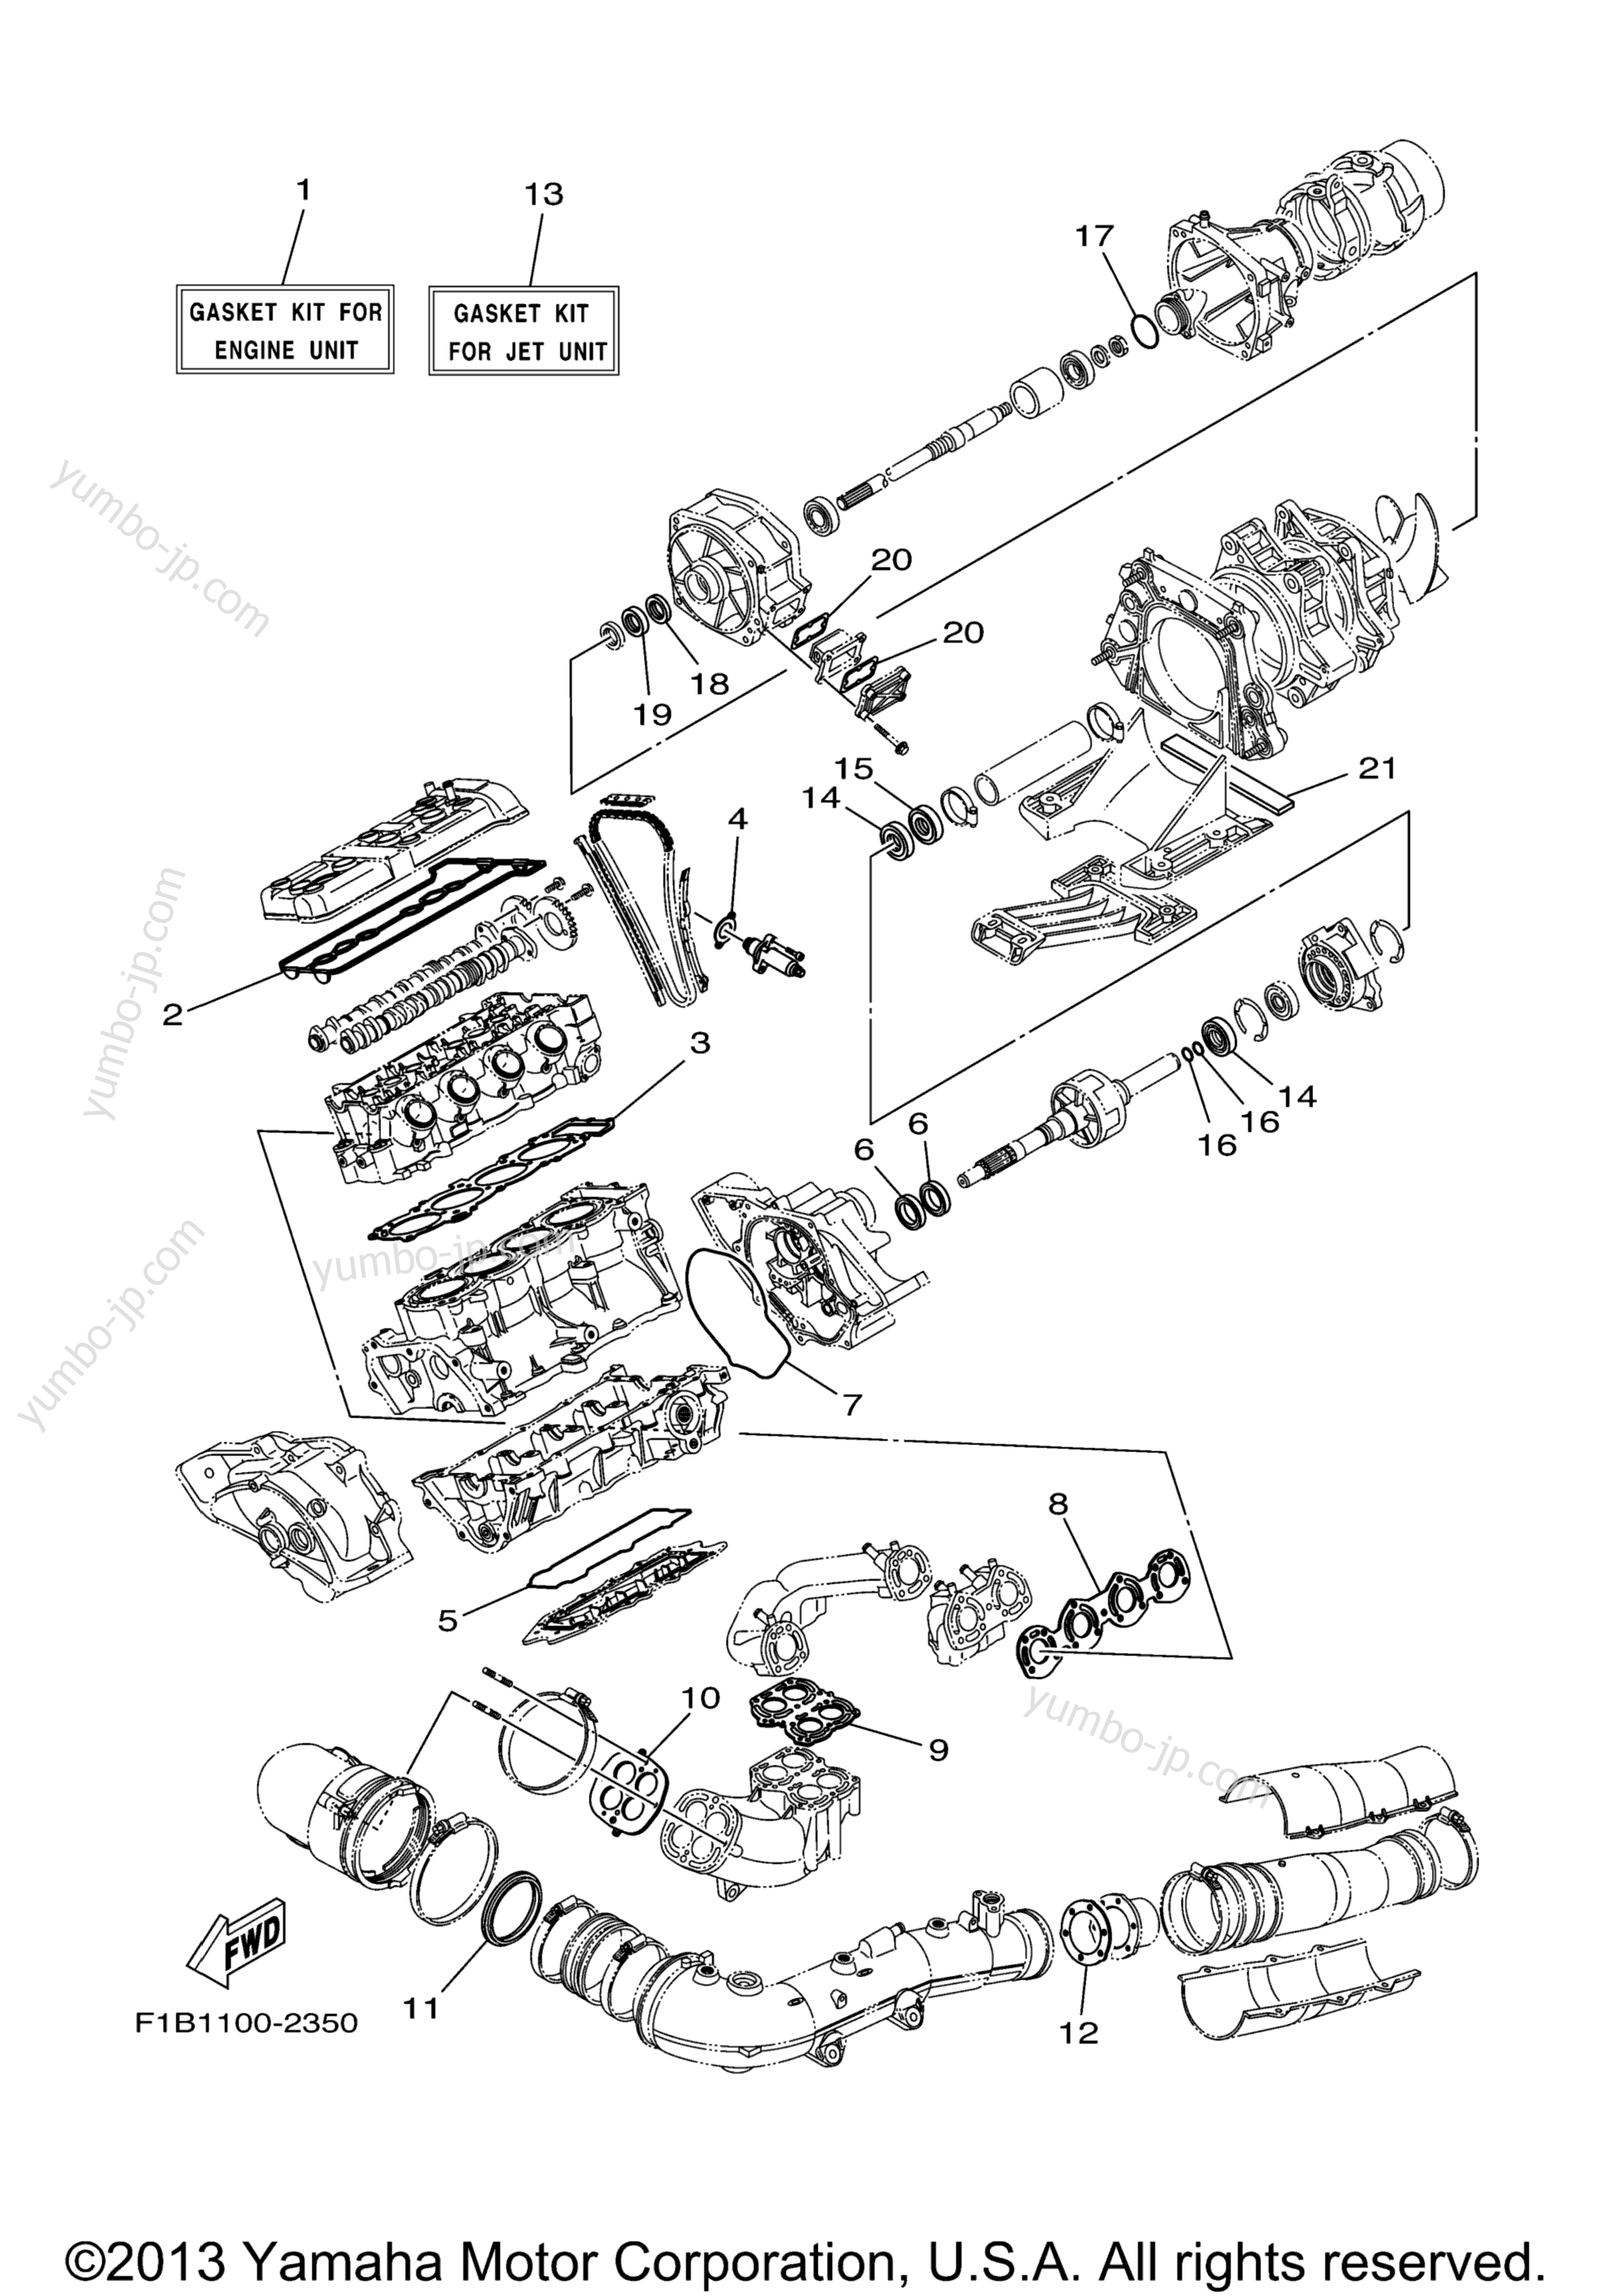 Repair Kit 1 для гидроциклов YAMAHA FX140 (FX1000CB) CA 2003 г.